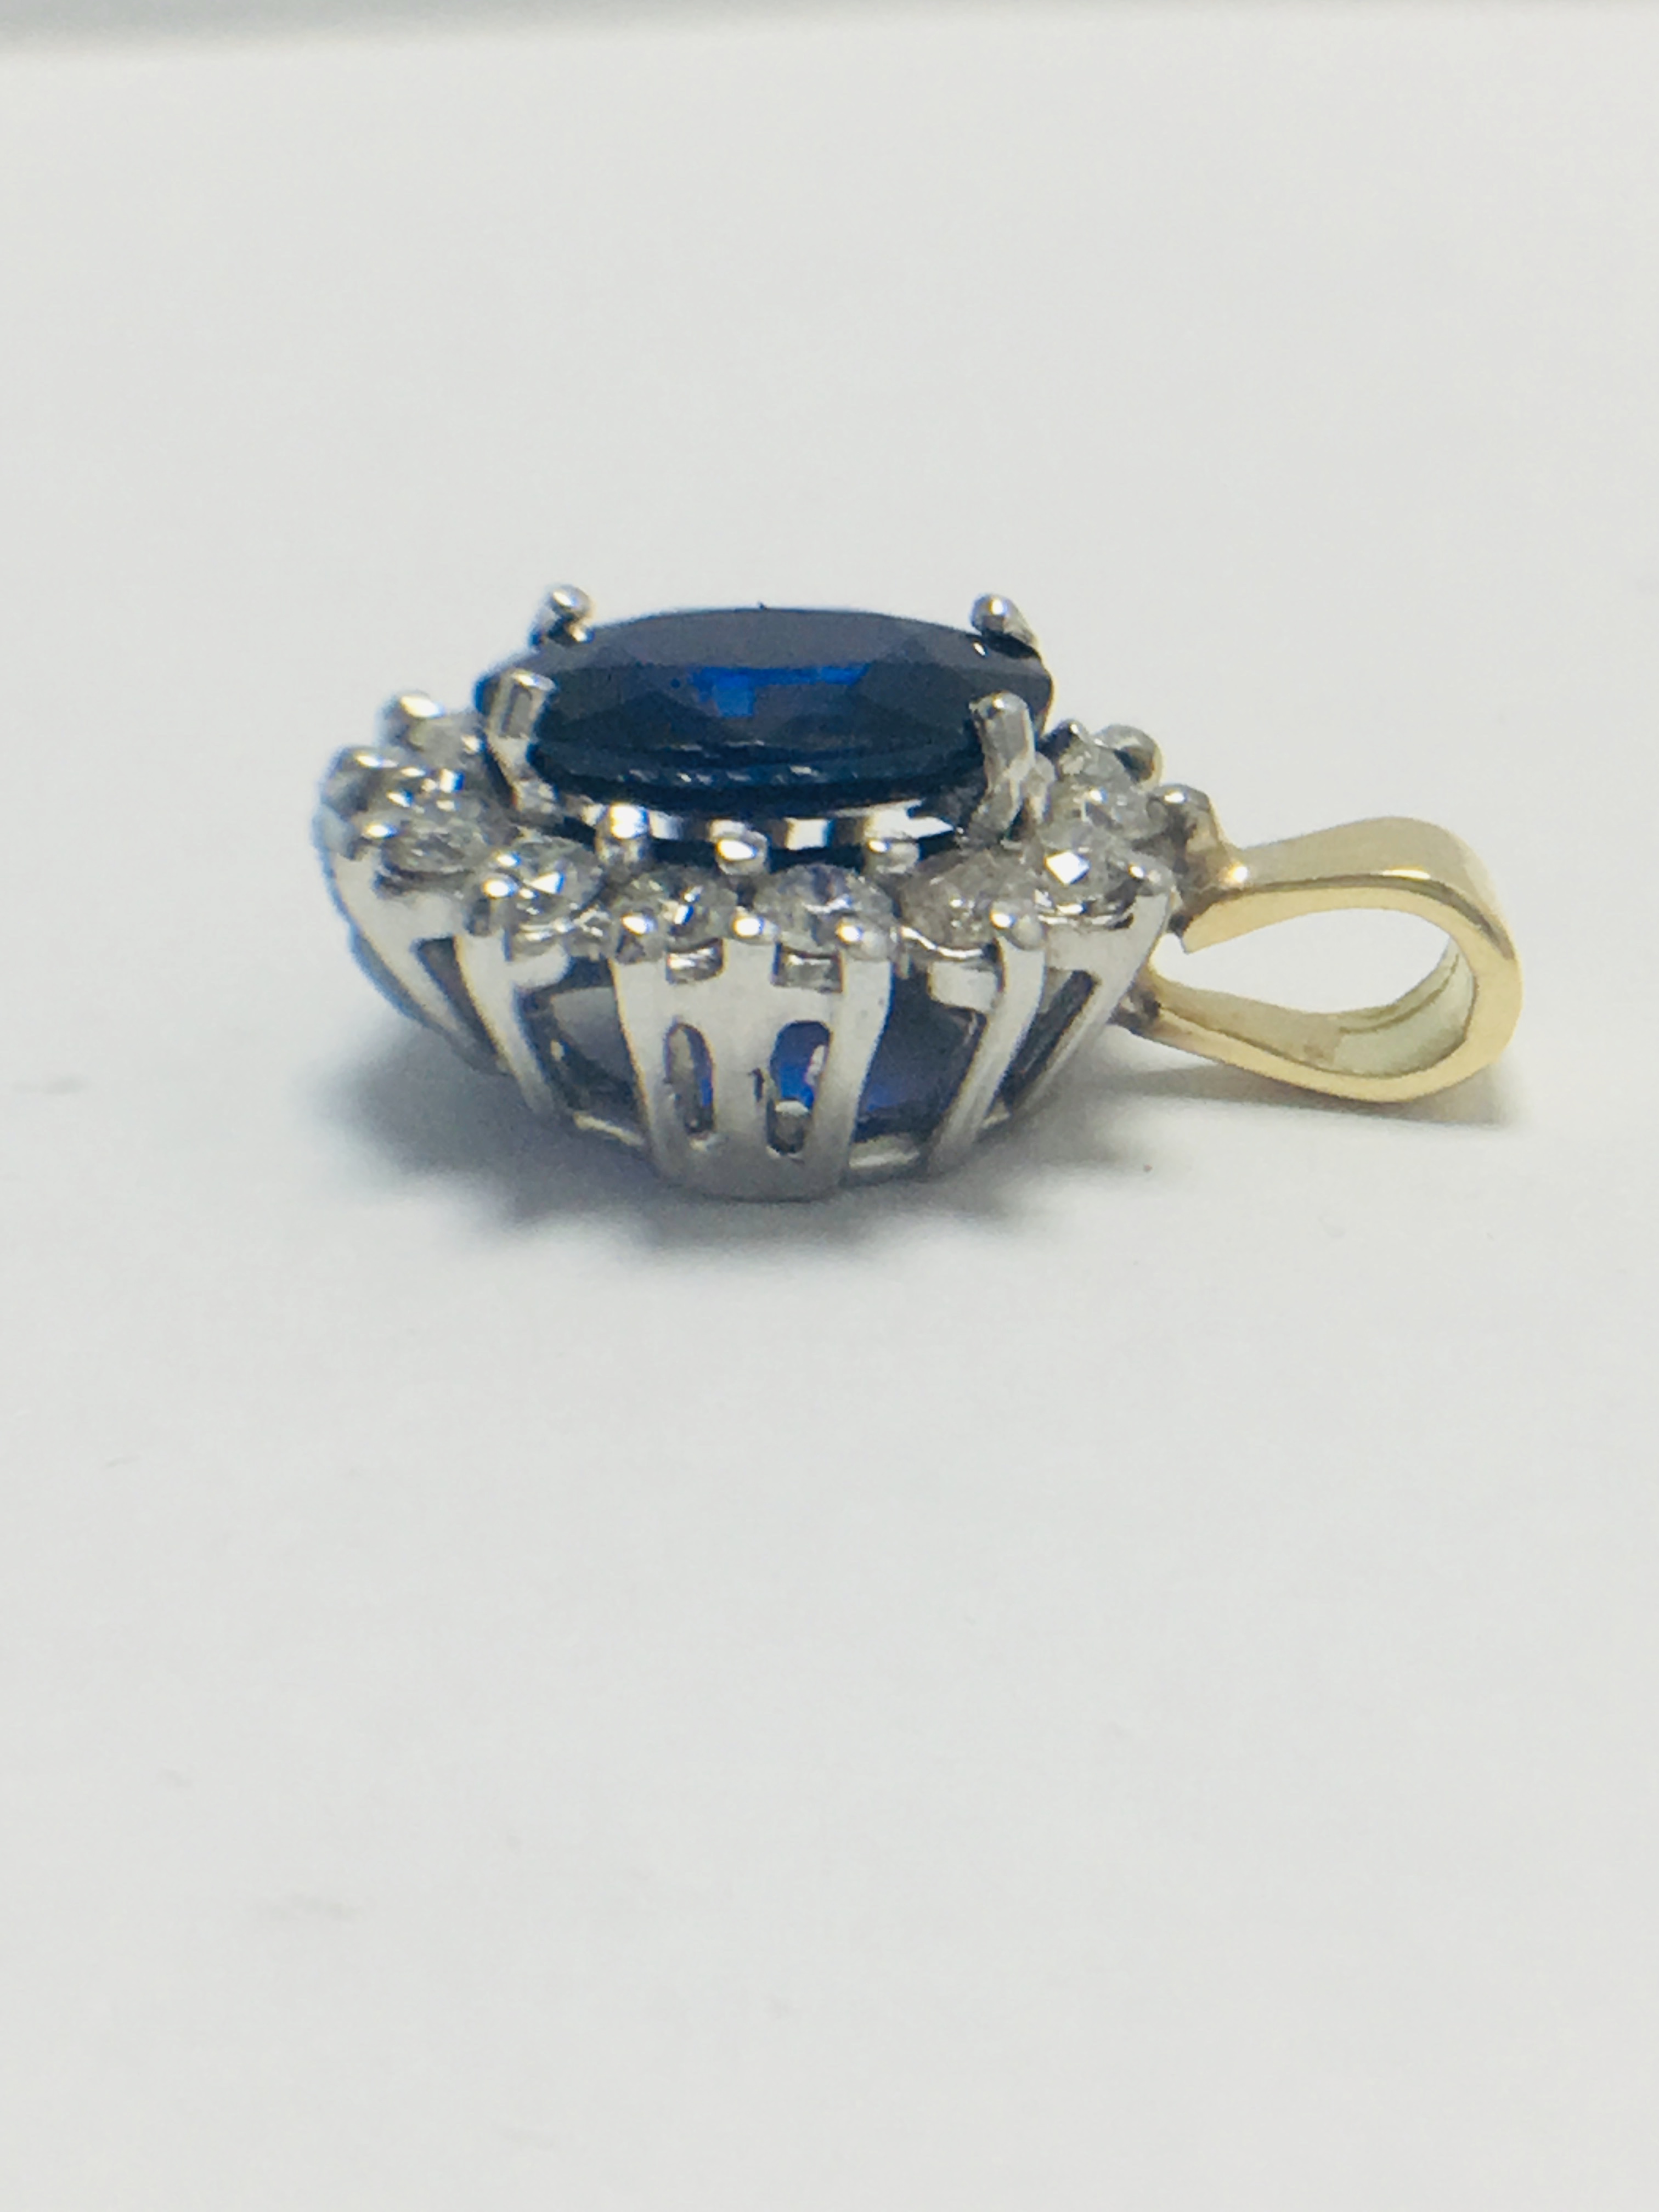 Sapphire and Diamond pendant,18ct gold - Image 3 of 7